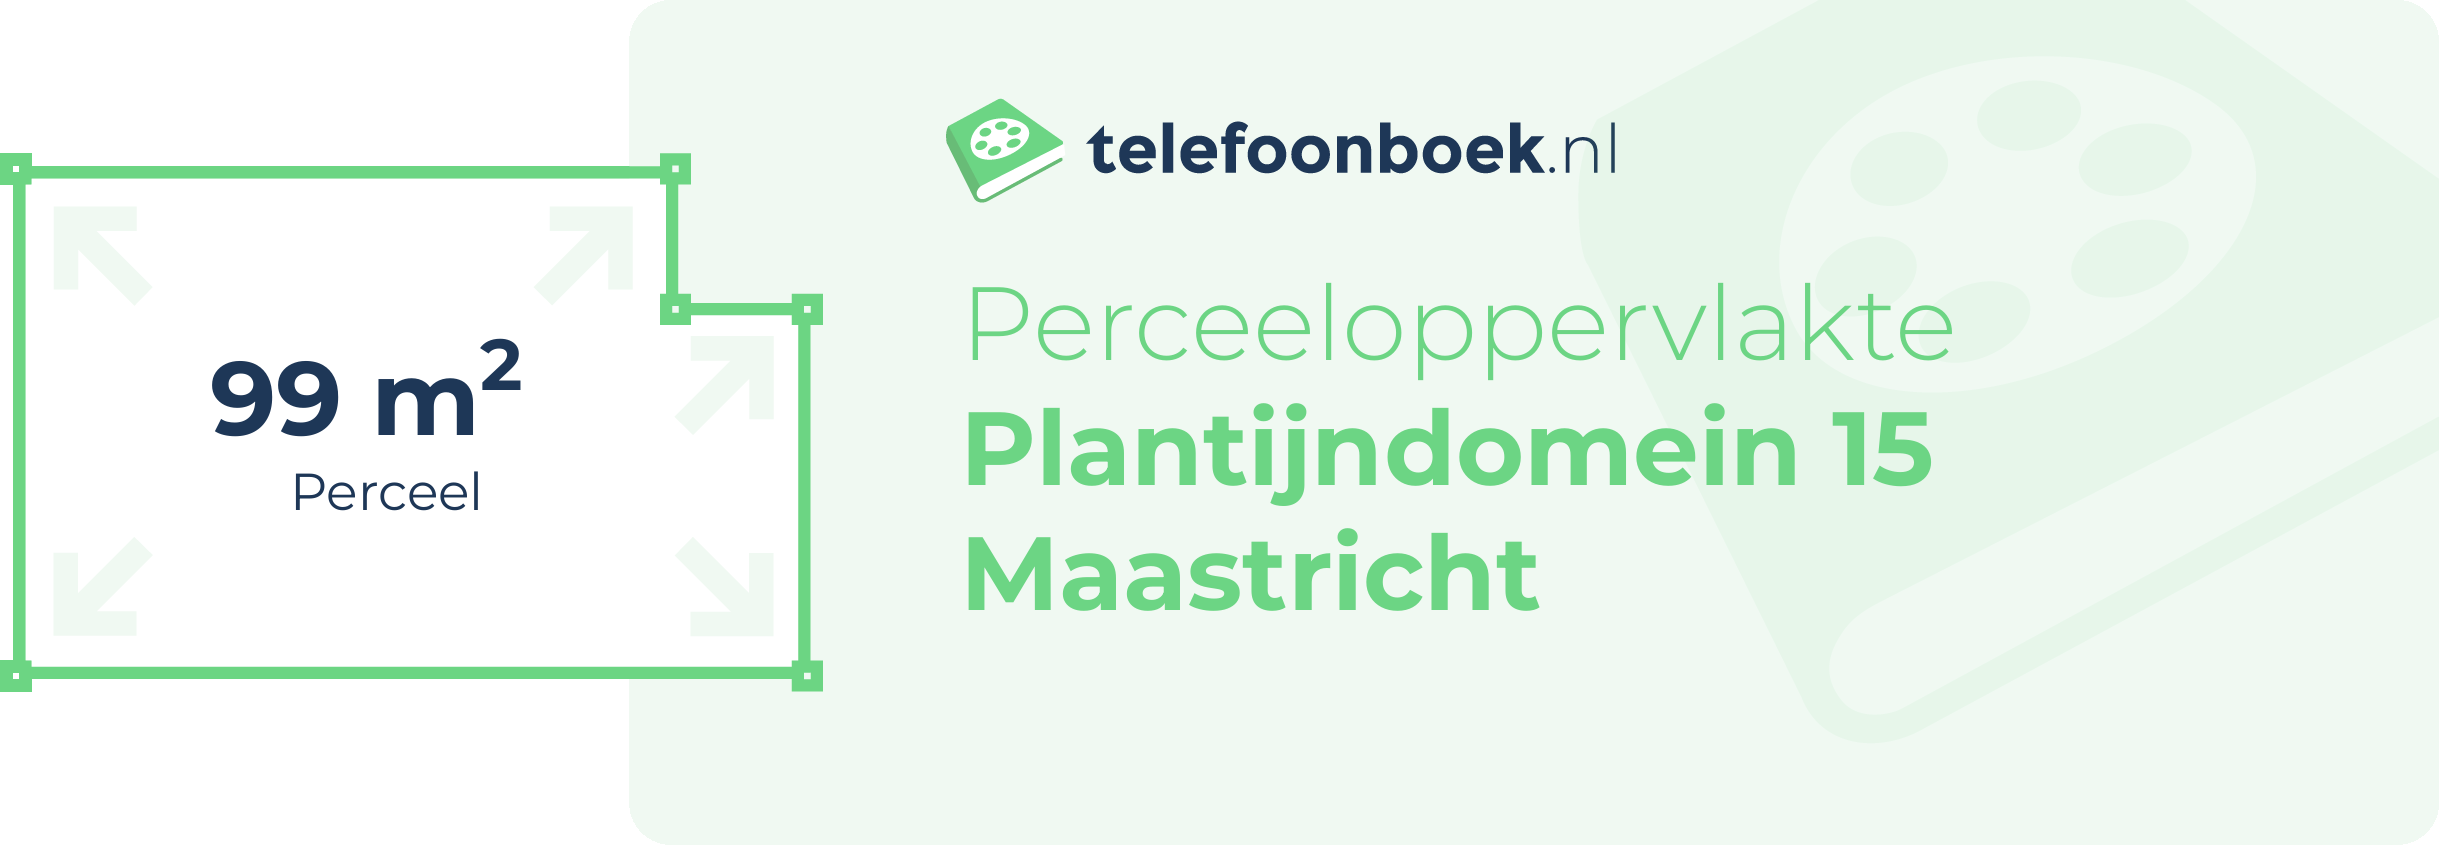 Perceeloppervlakte Plantijndomein 15 Maastricht